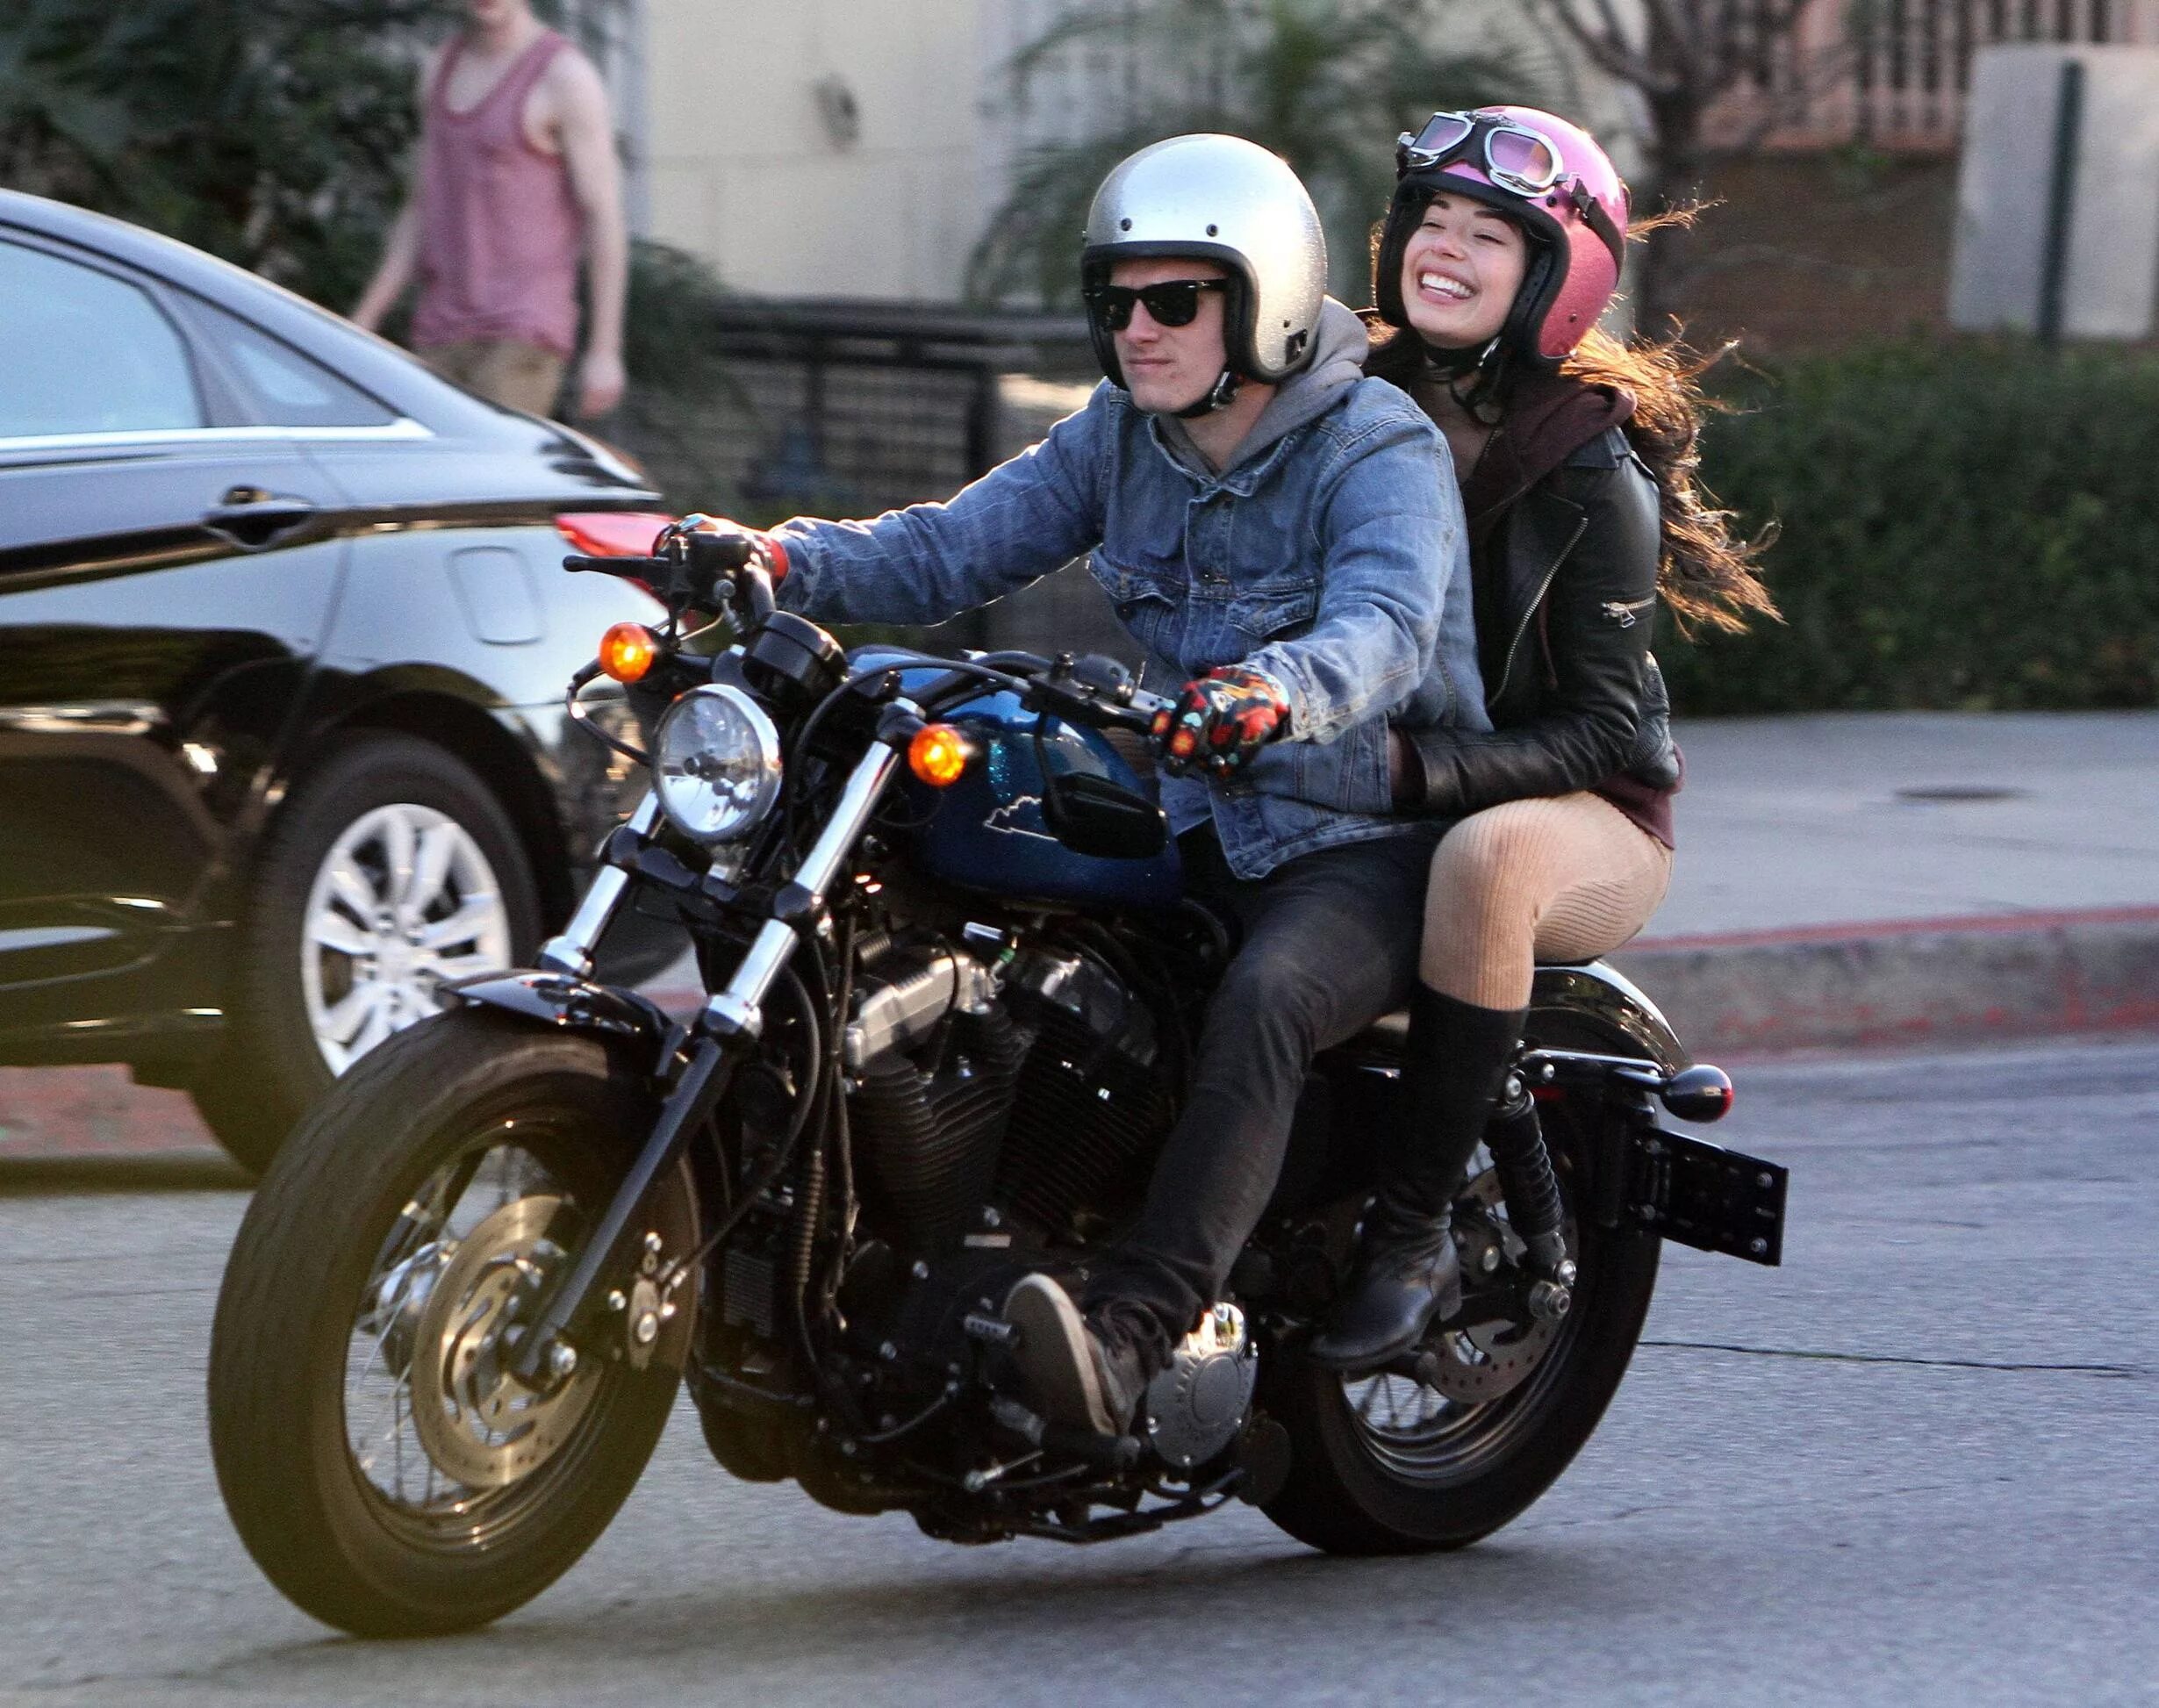 Жена байкера. Мотоцикл с пассажиром. Мотоциклист с пассажиром. Кататься на мотоцикле. Два человека на мотоцикле.